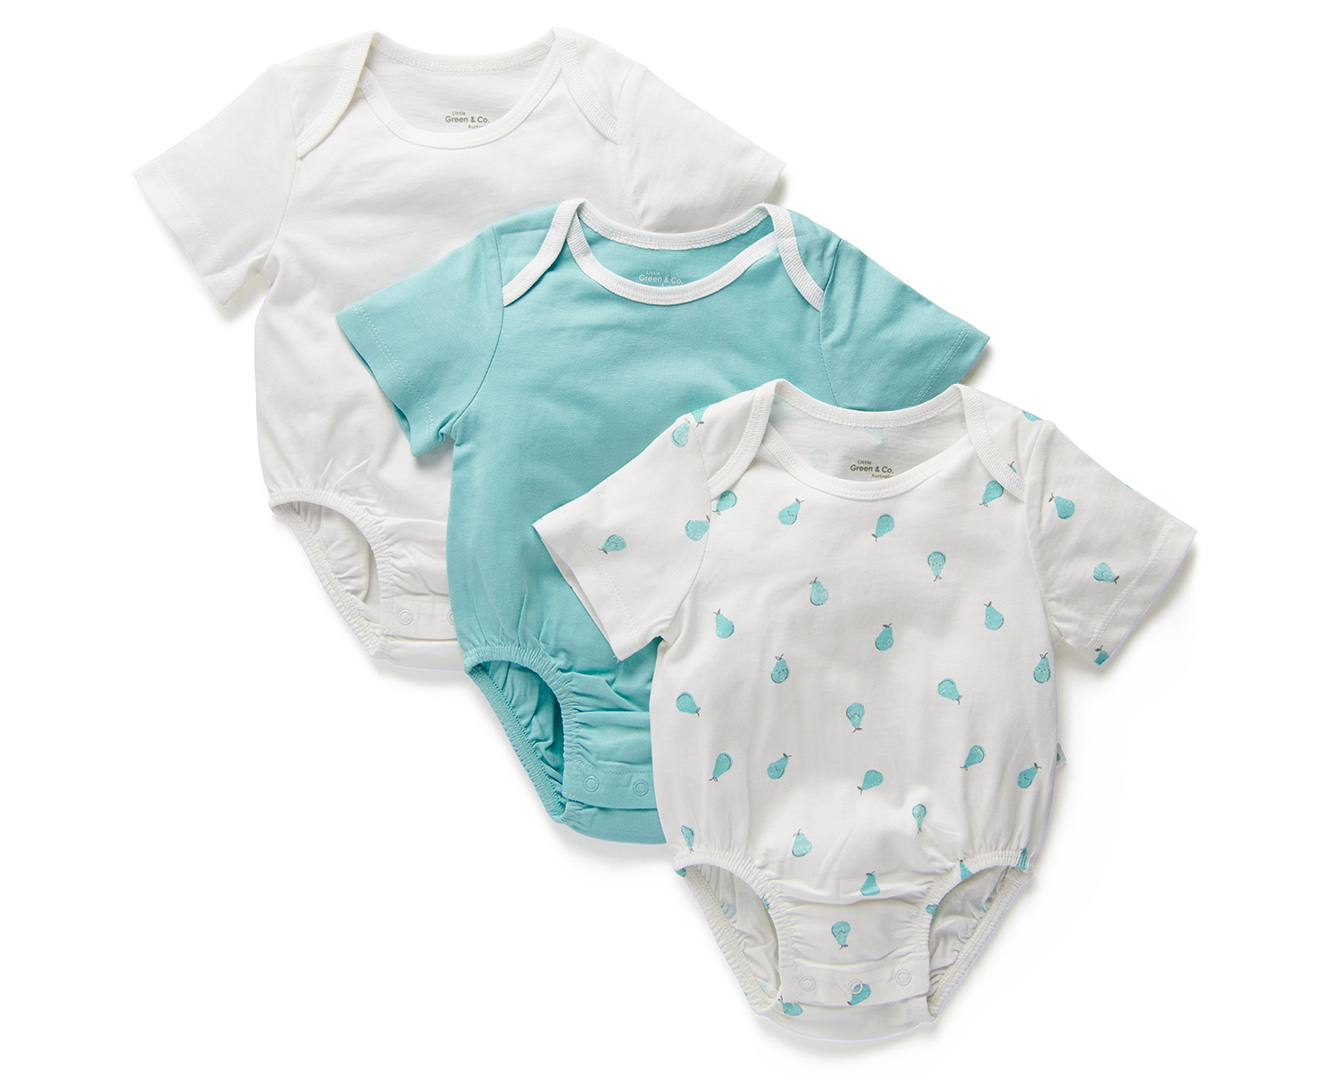 Infant Layette Gift Outfit 6 Piece Orangic Cotton Clothes & Accessories Set 